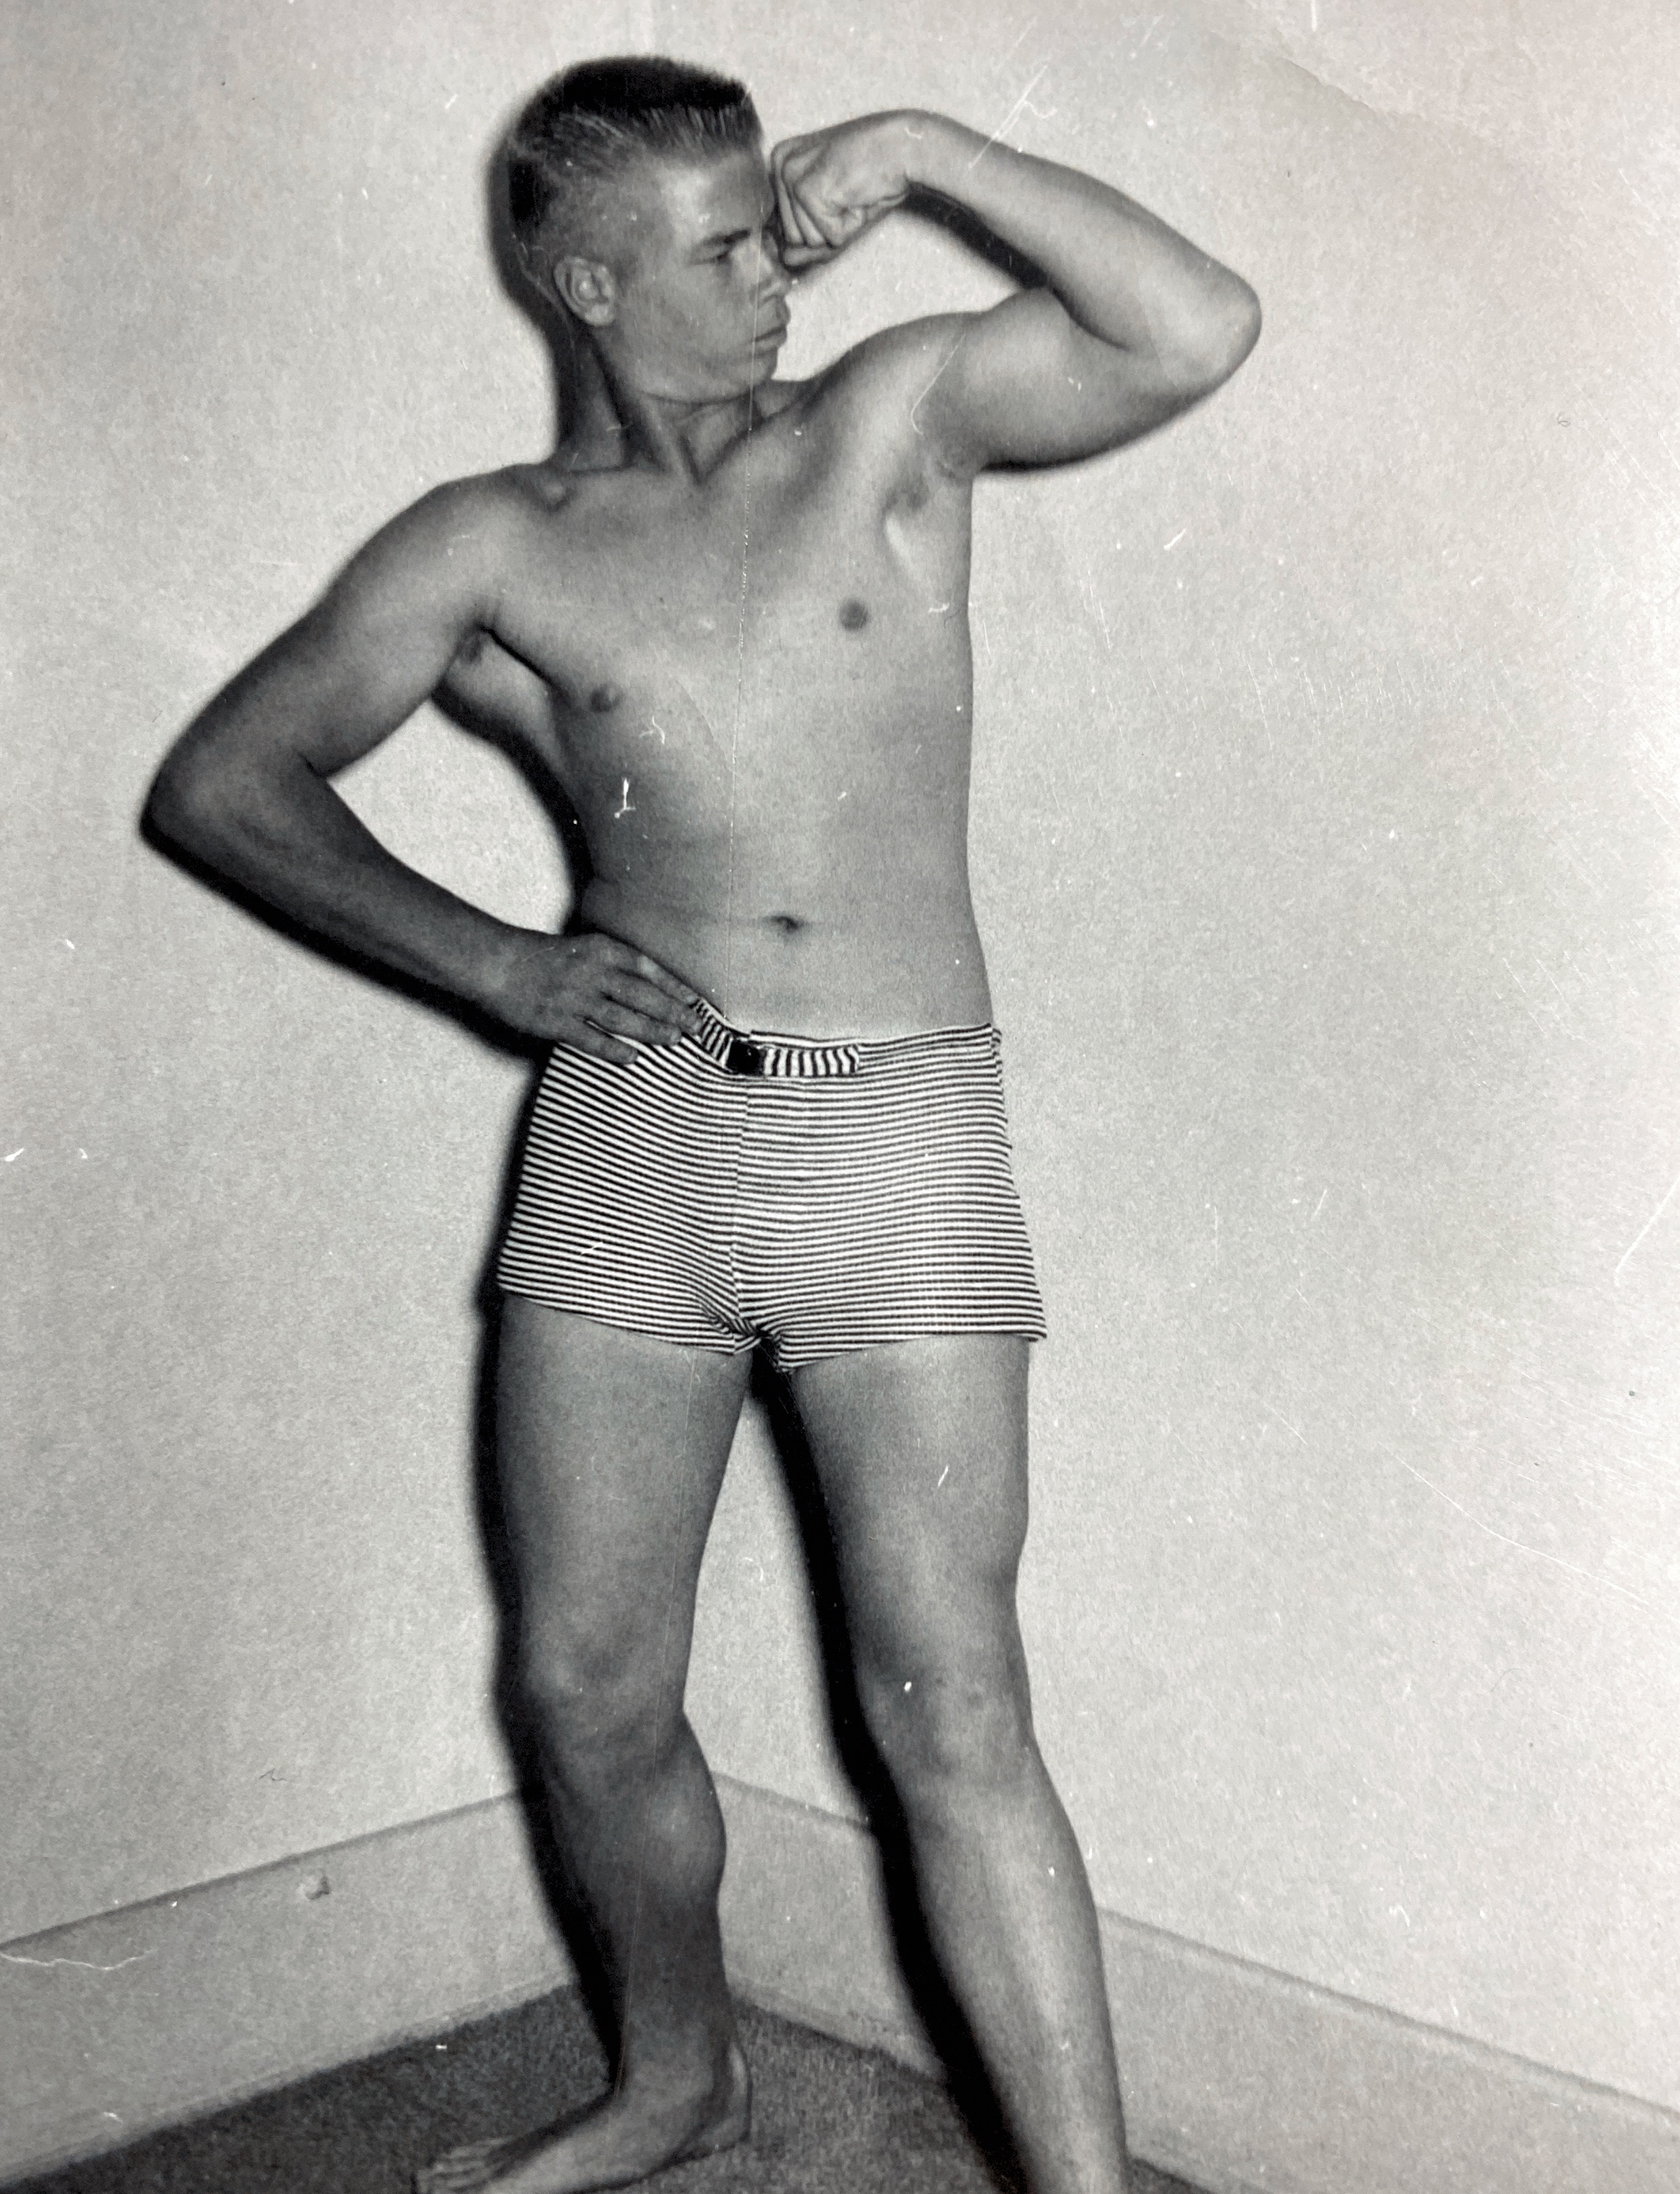 Roger the weight lifter bodybuilder 1959